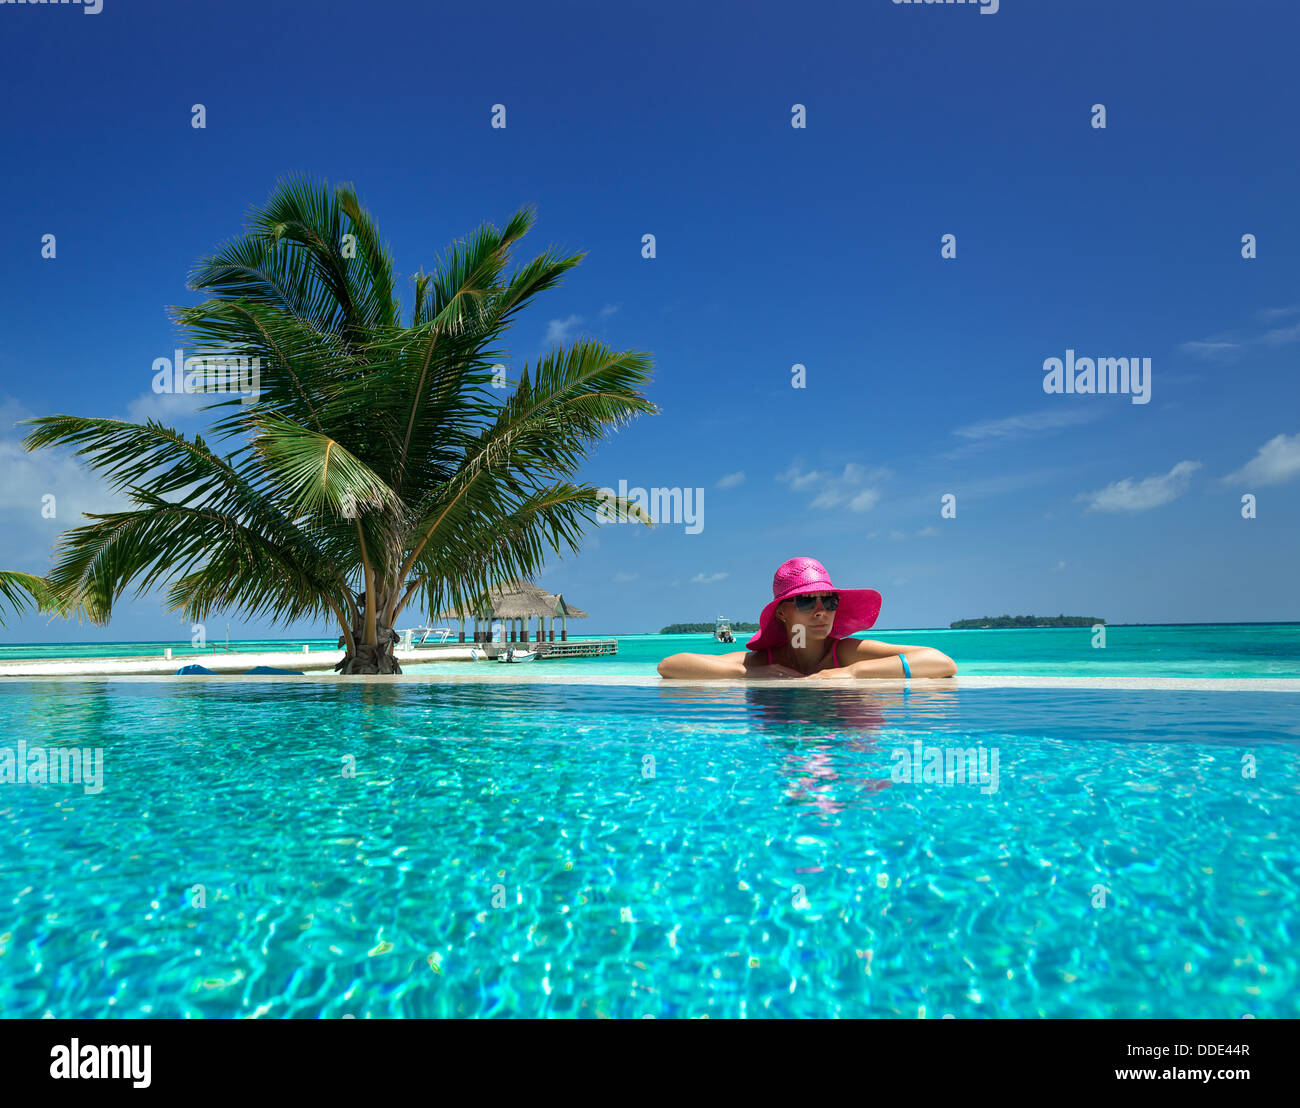 Vacanze in spiaggia in piscina Foto Stock